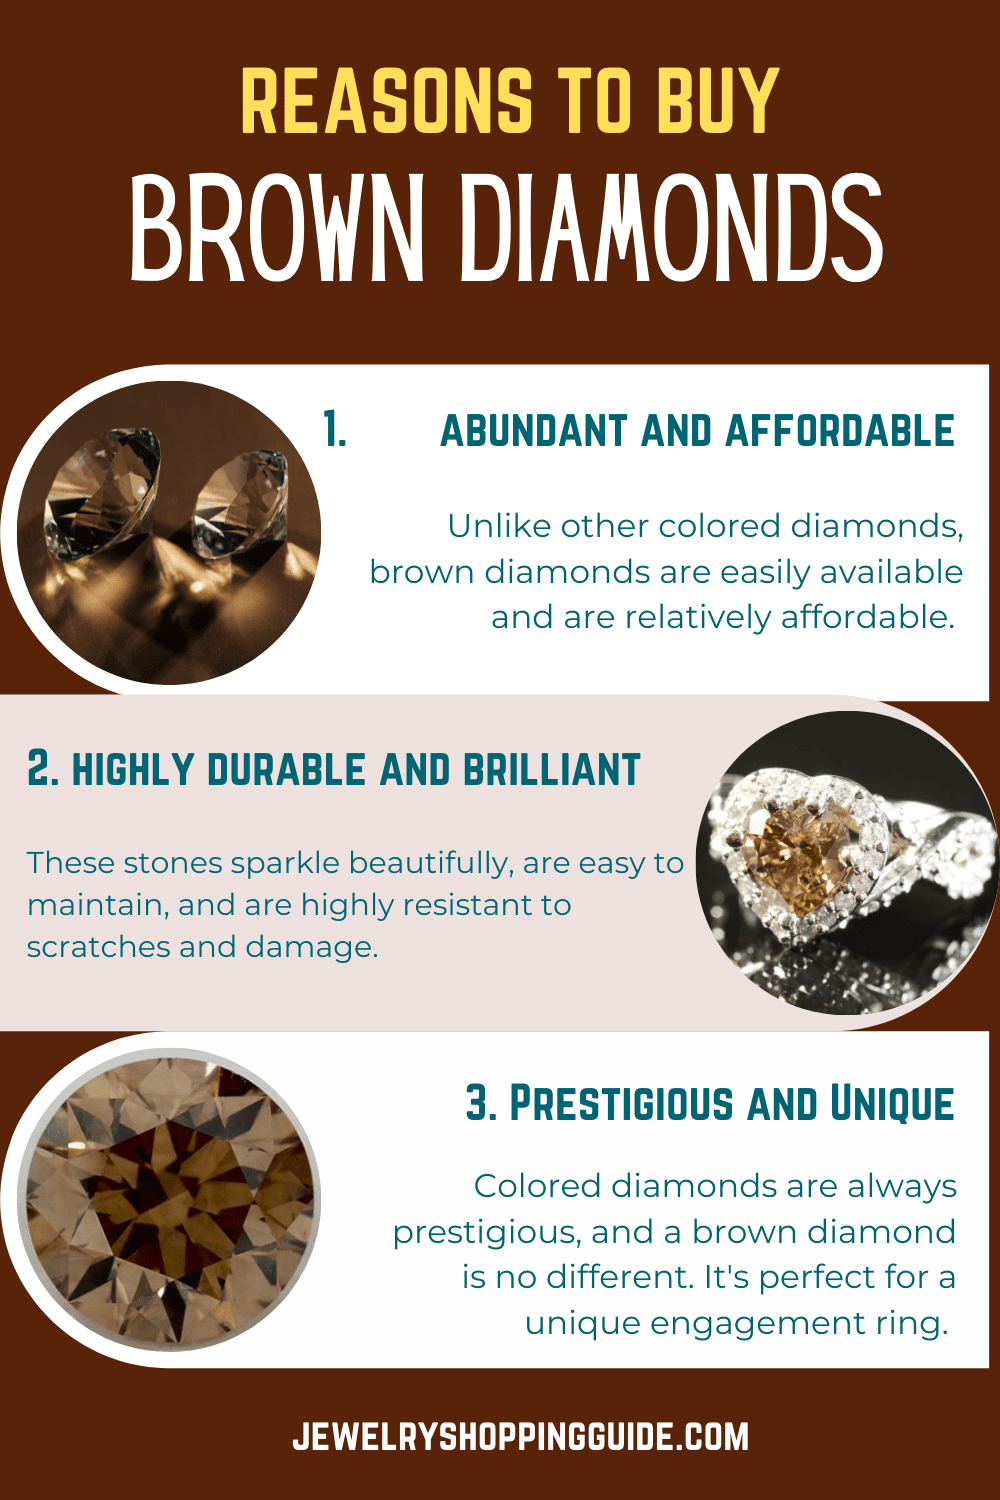 Why buy brown diamonds?